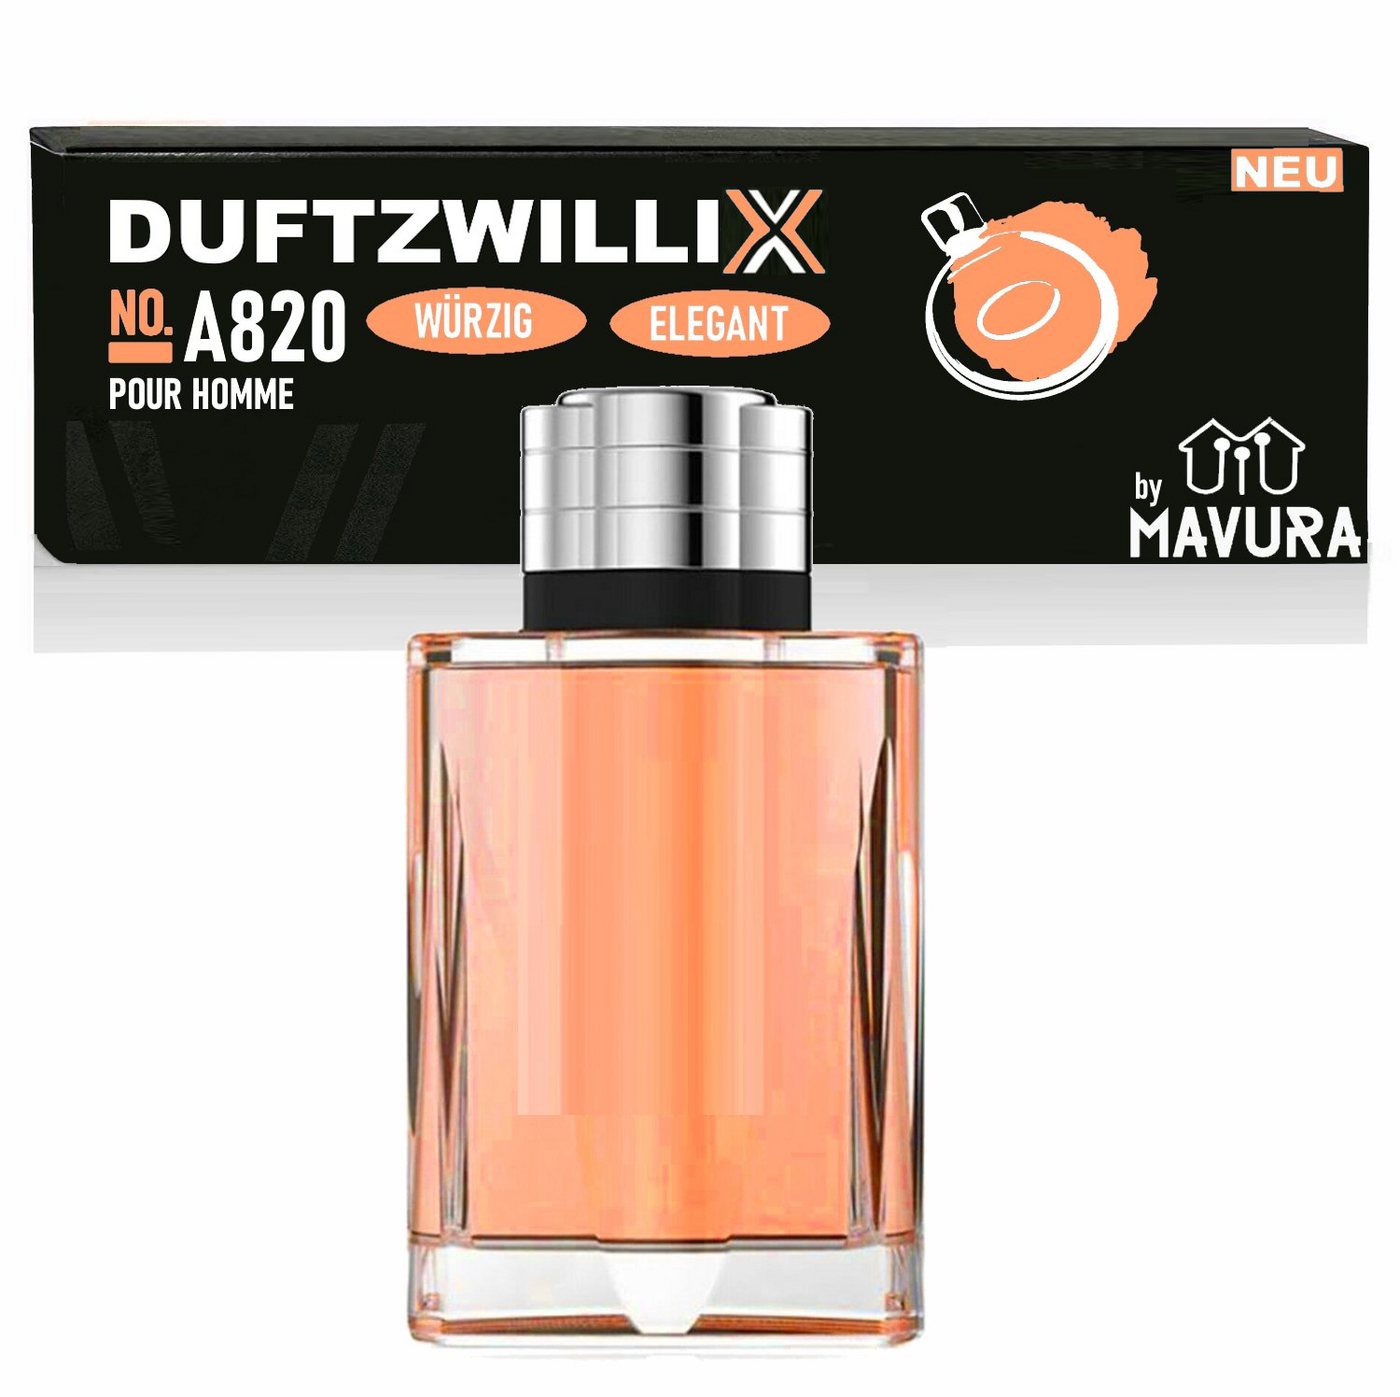 MAVURA Eau de Toilette DUFTZWILLIX No. A820 - Parfüm für Herren - würzig eleganter Duft, - 100ml - Duftzwilling / Dupe Sale von MAVURA